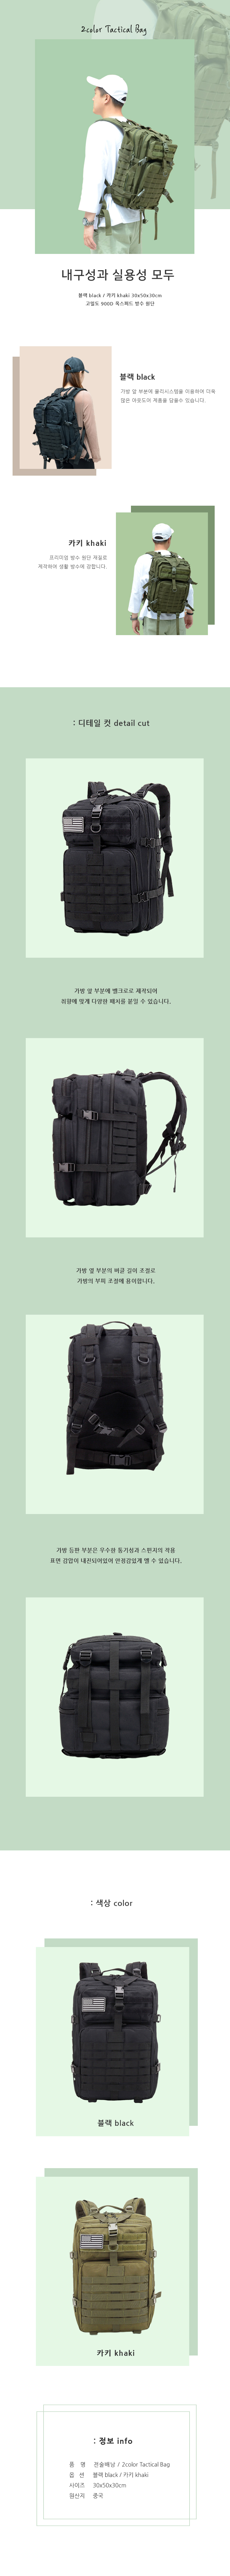 3color_backpack.jpg